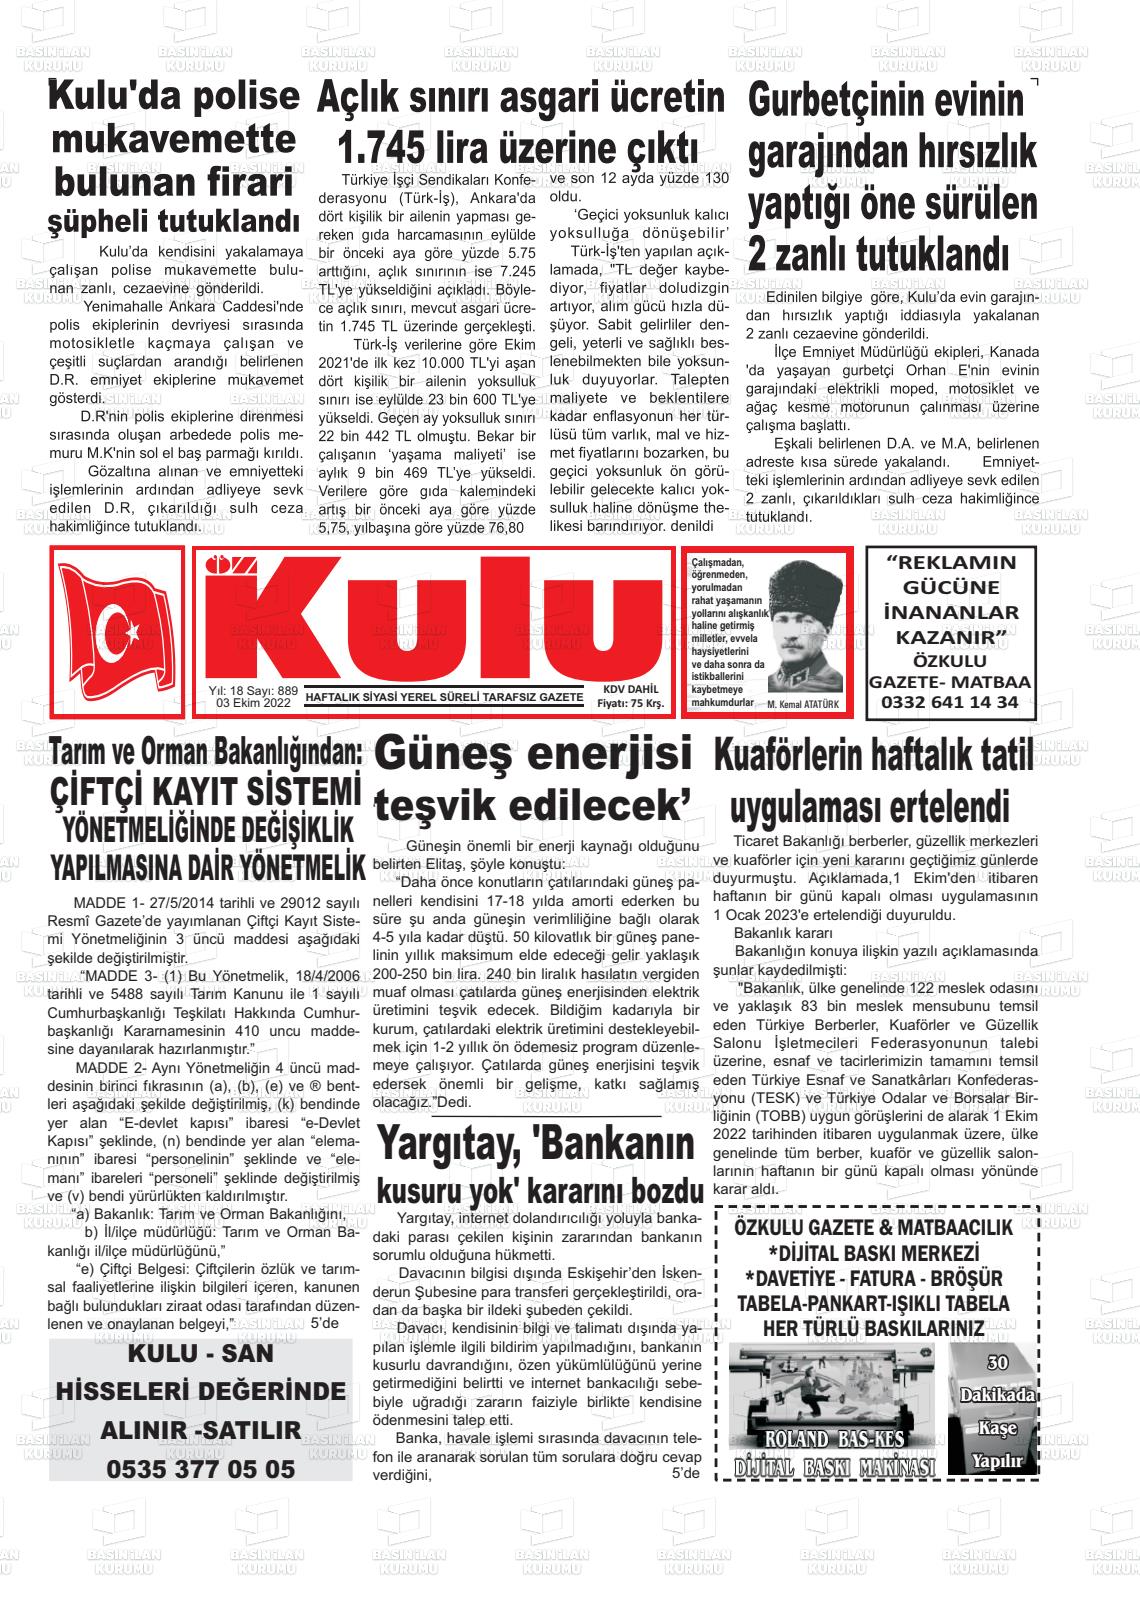 03 Ekim 2022 Öz Kulu Gazete Manşeti